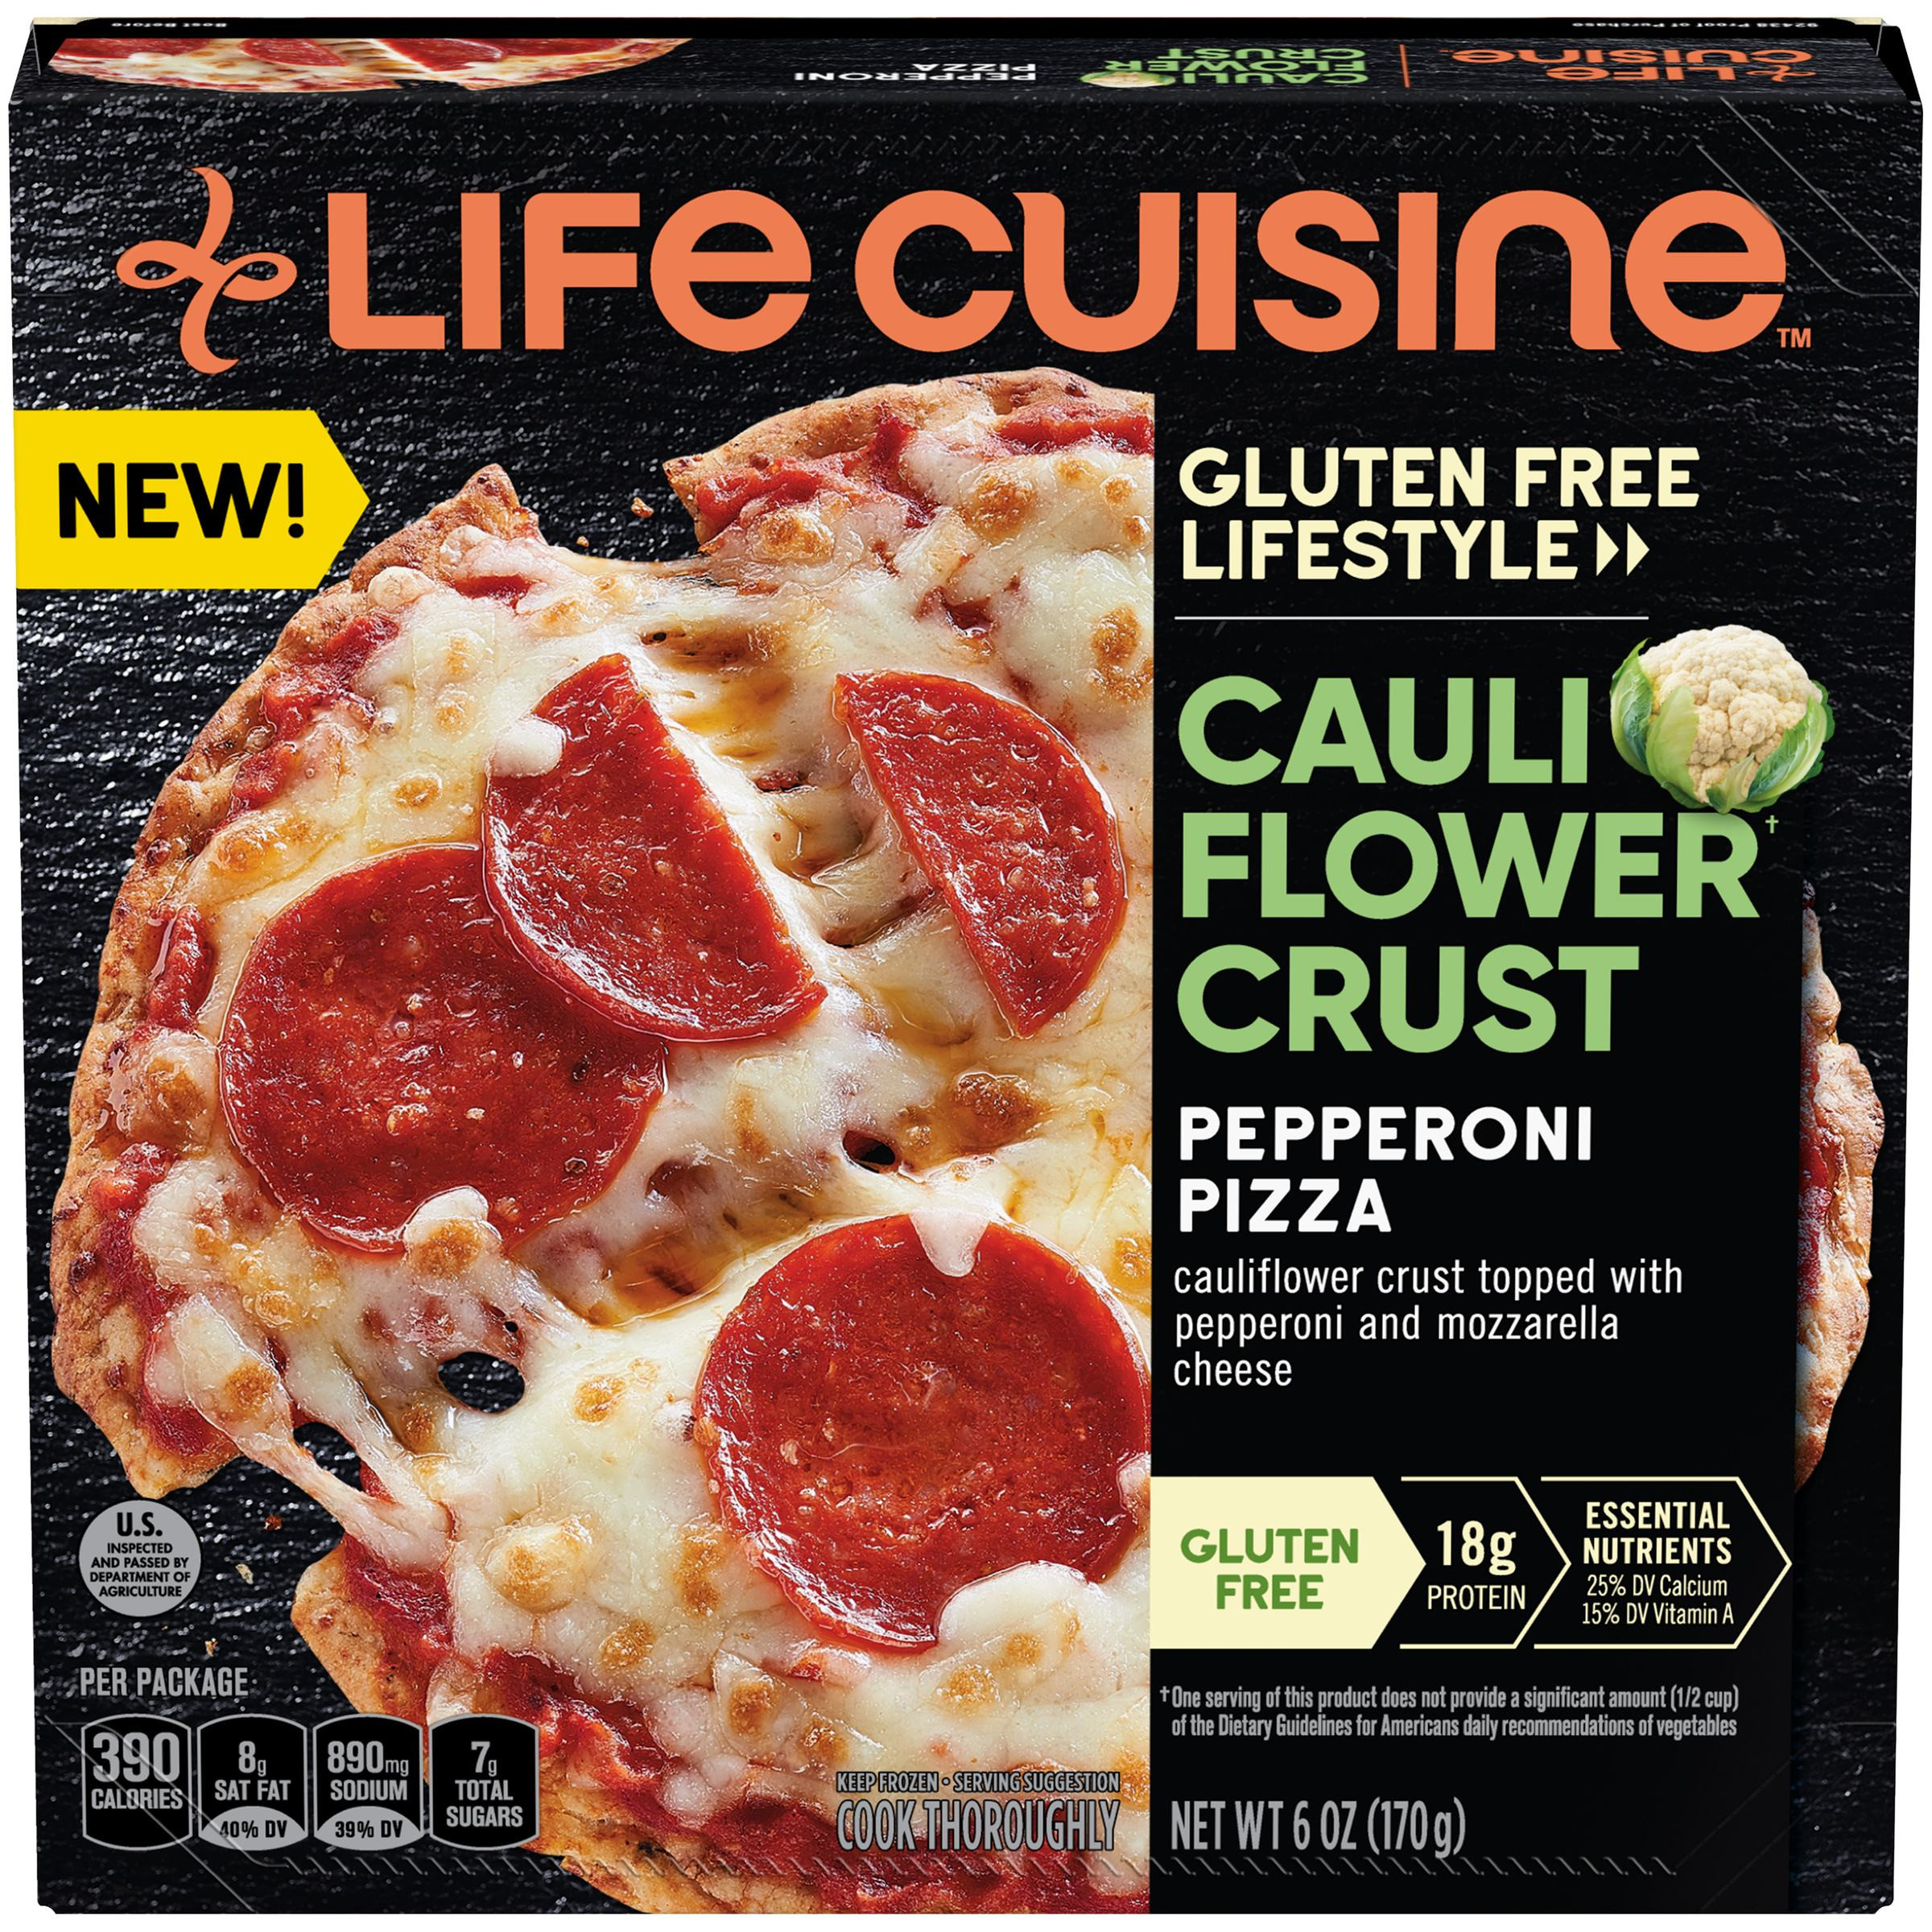 Cauliflower Pizza Crust Walmart
 LIFE CUISINE GLUTEN FREE LIFESTYLE Cauliflower Crust